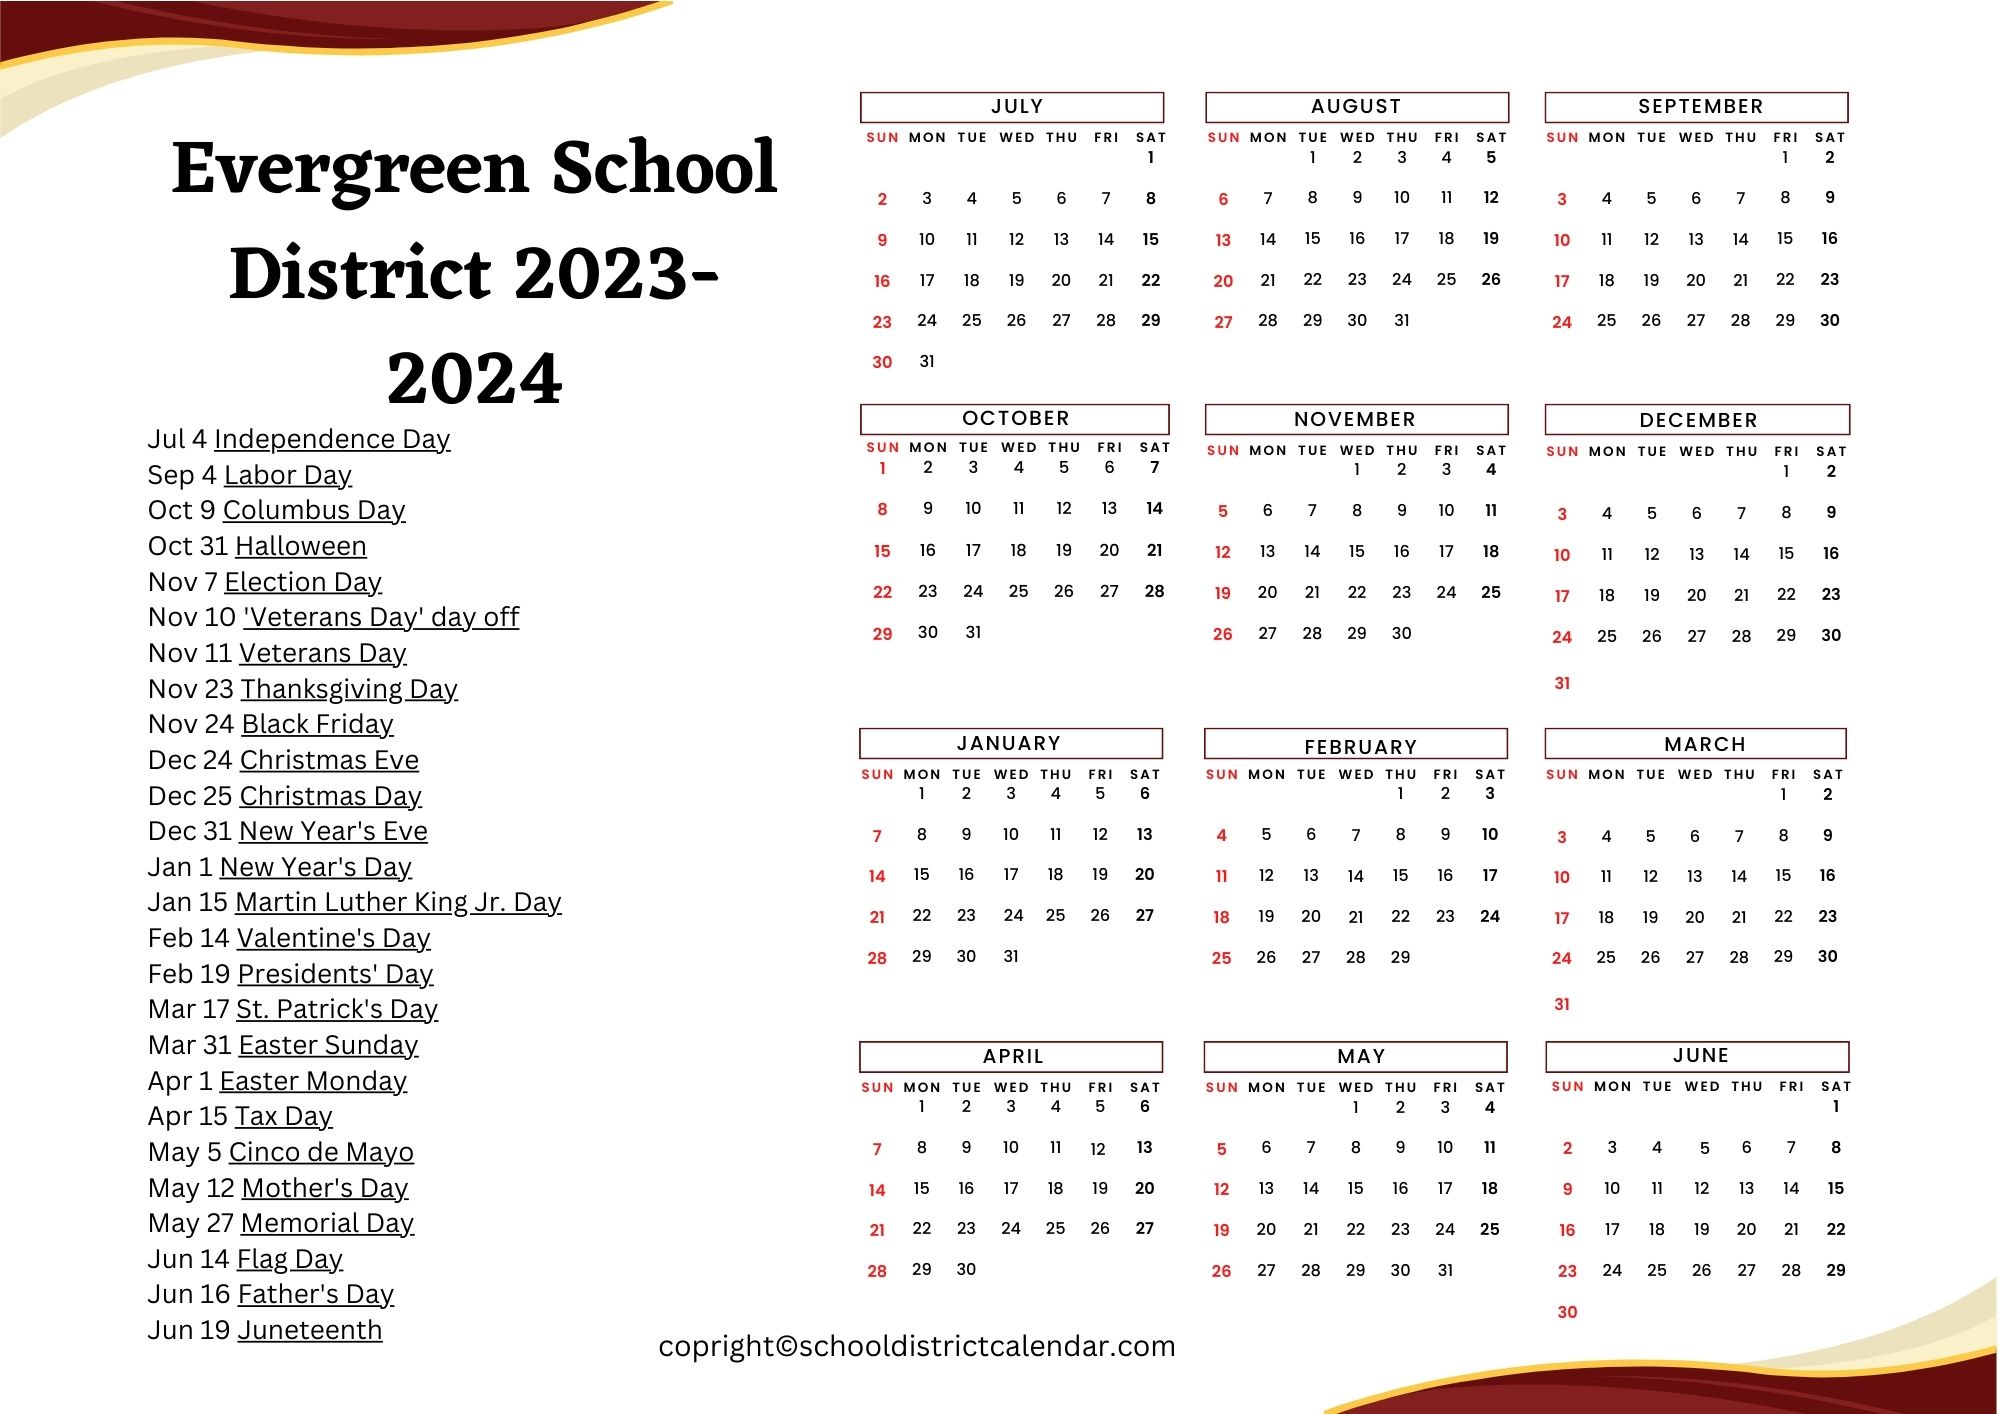 Evergreen School District Calendar Holidays 2023-2024